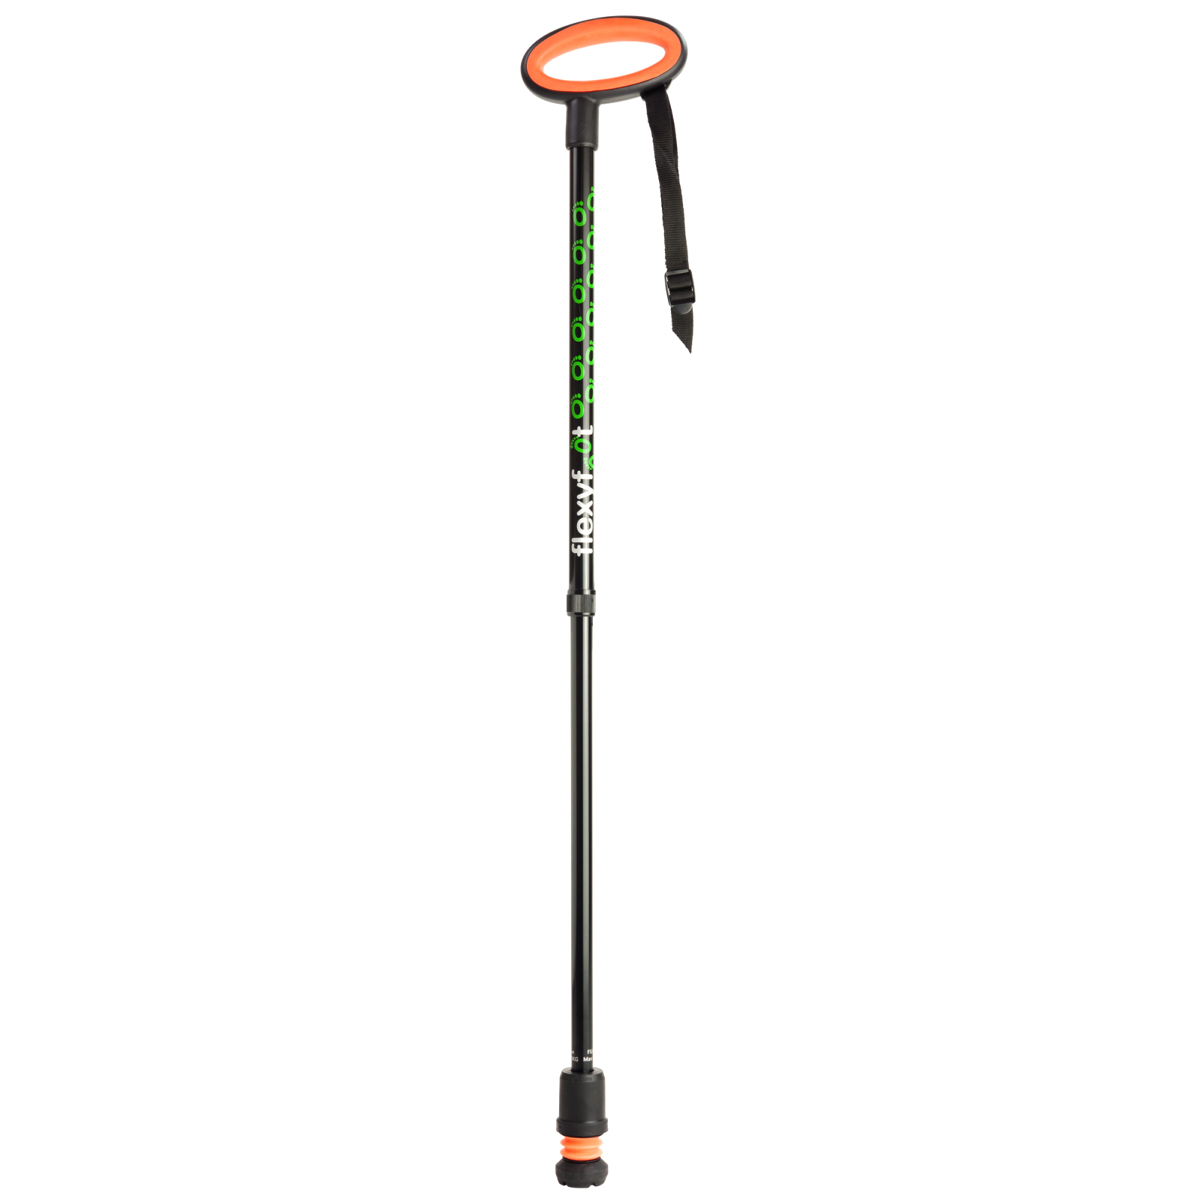 A single black Flexyfoot Premium Oval Handle Walking Stick